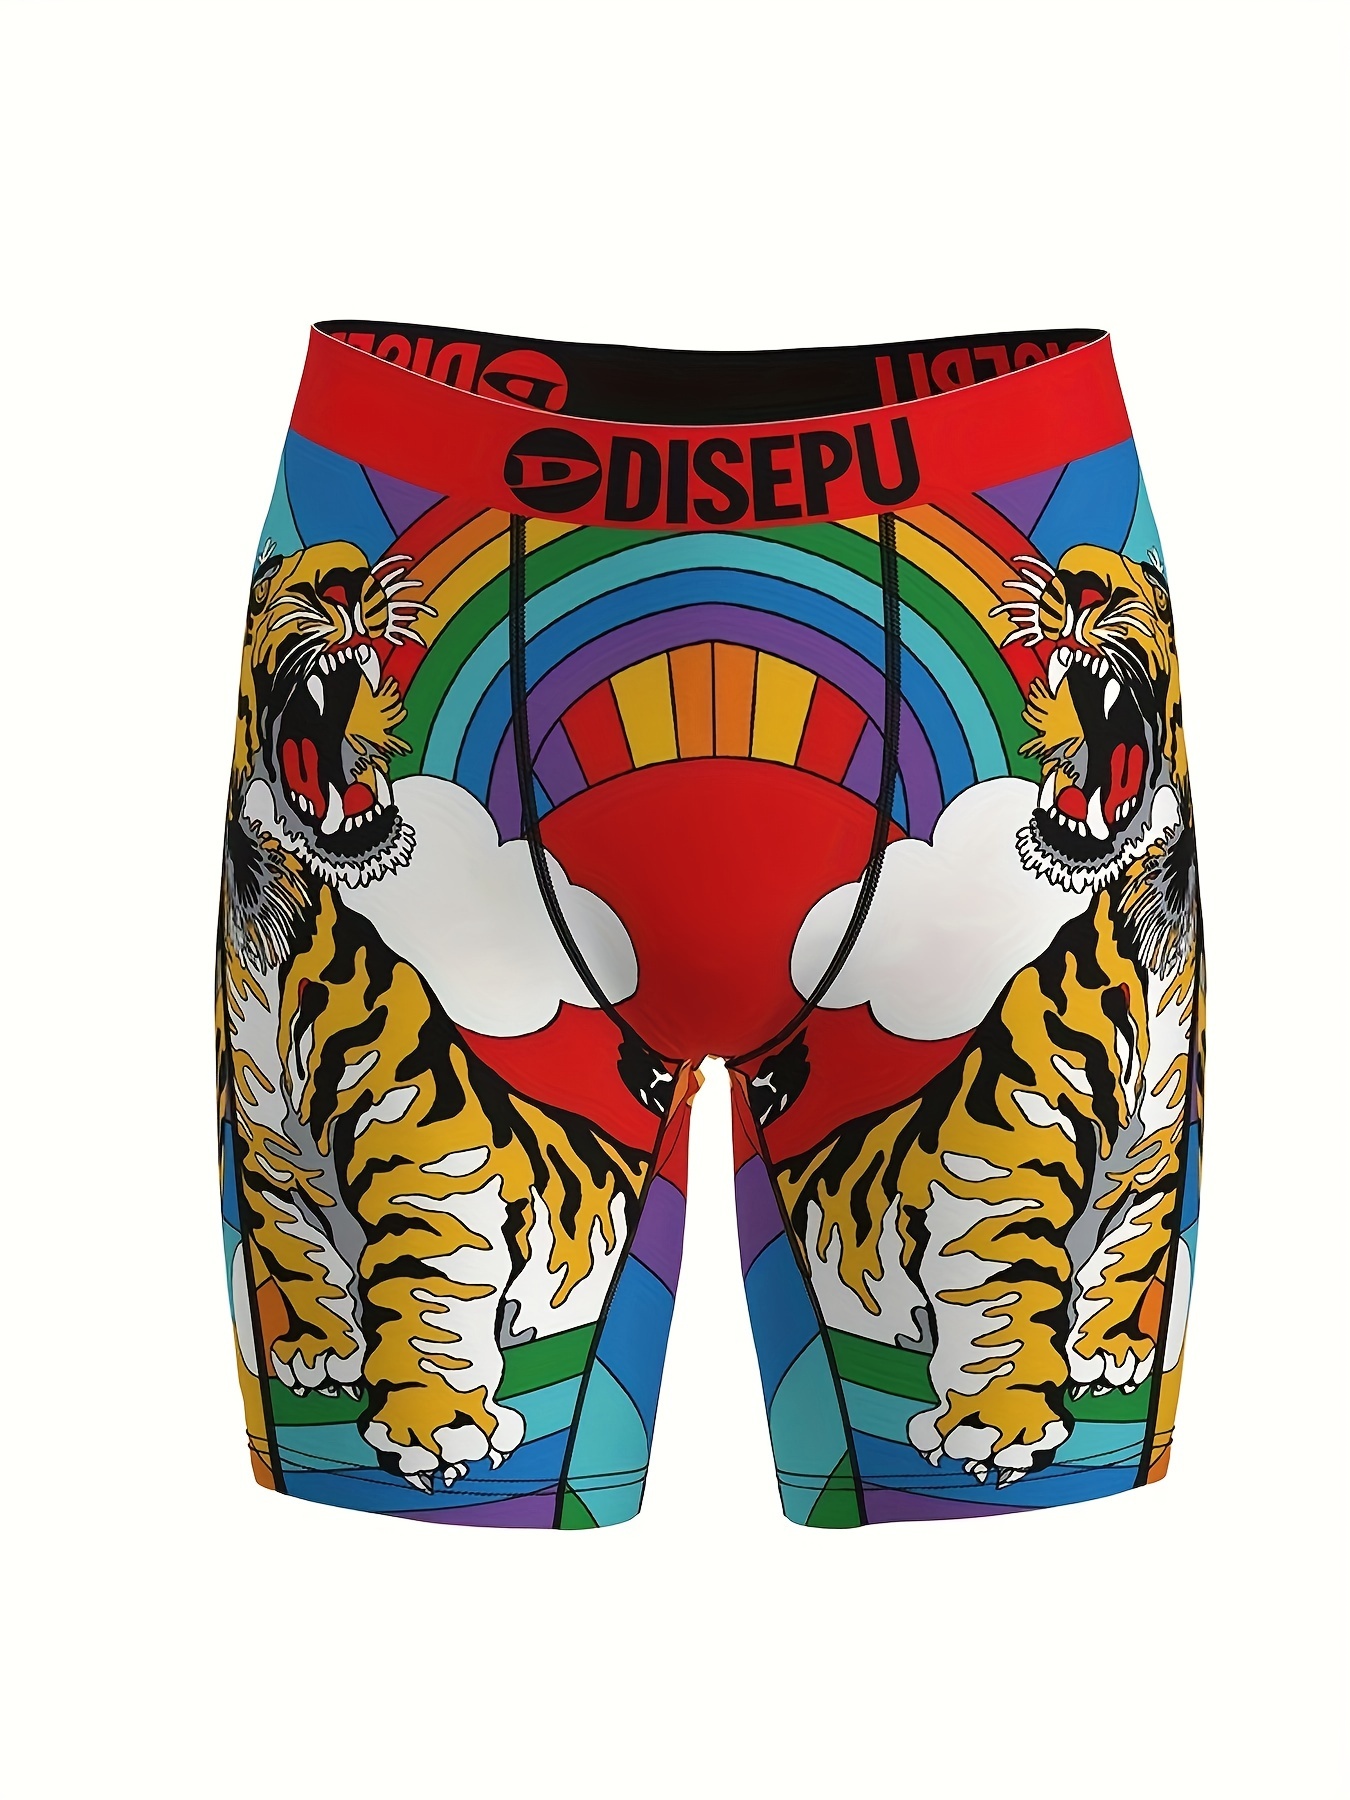 X tiger Men's Cycling Shorts 5d Gel Pad Cycling Underwear - Temu